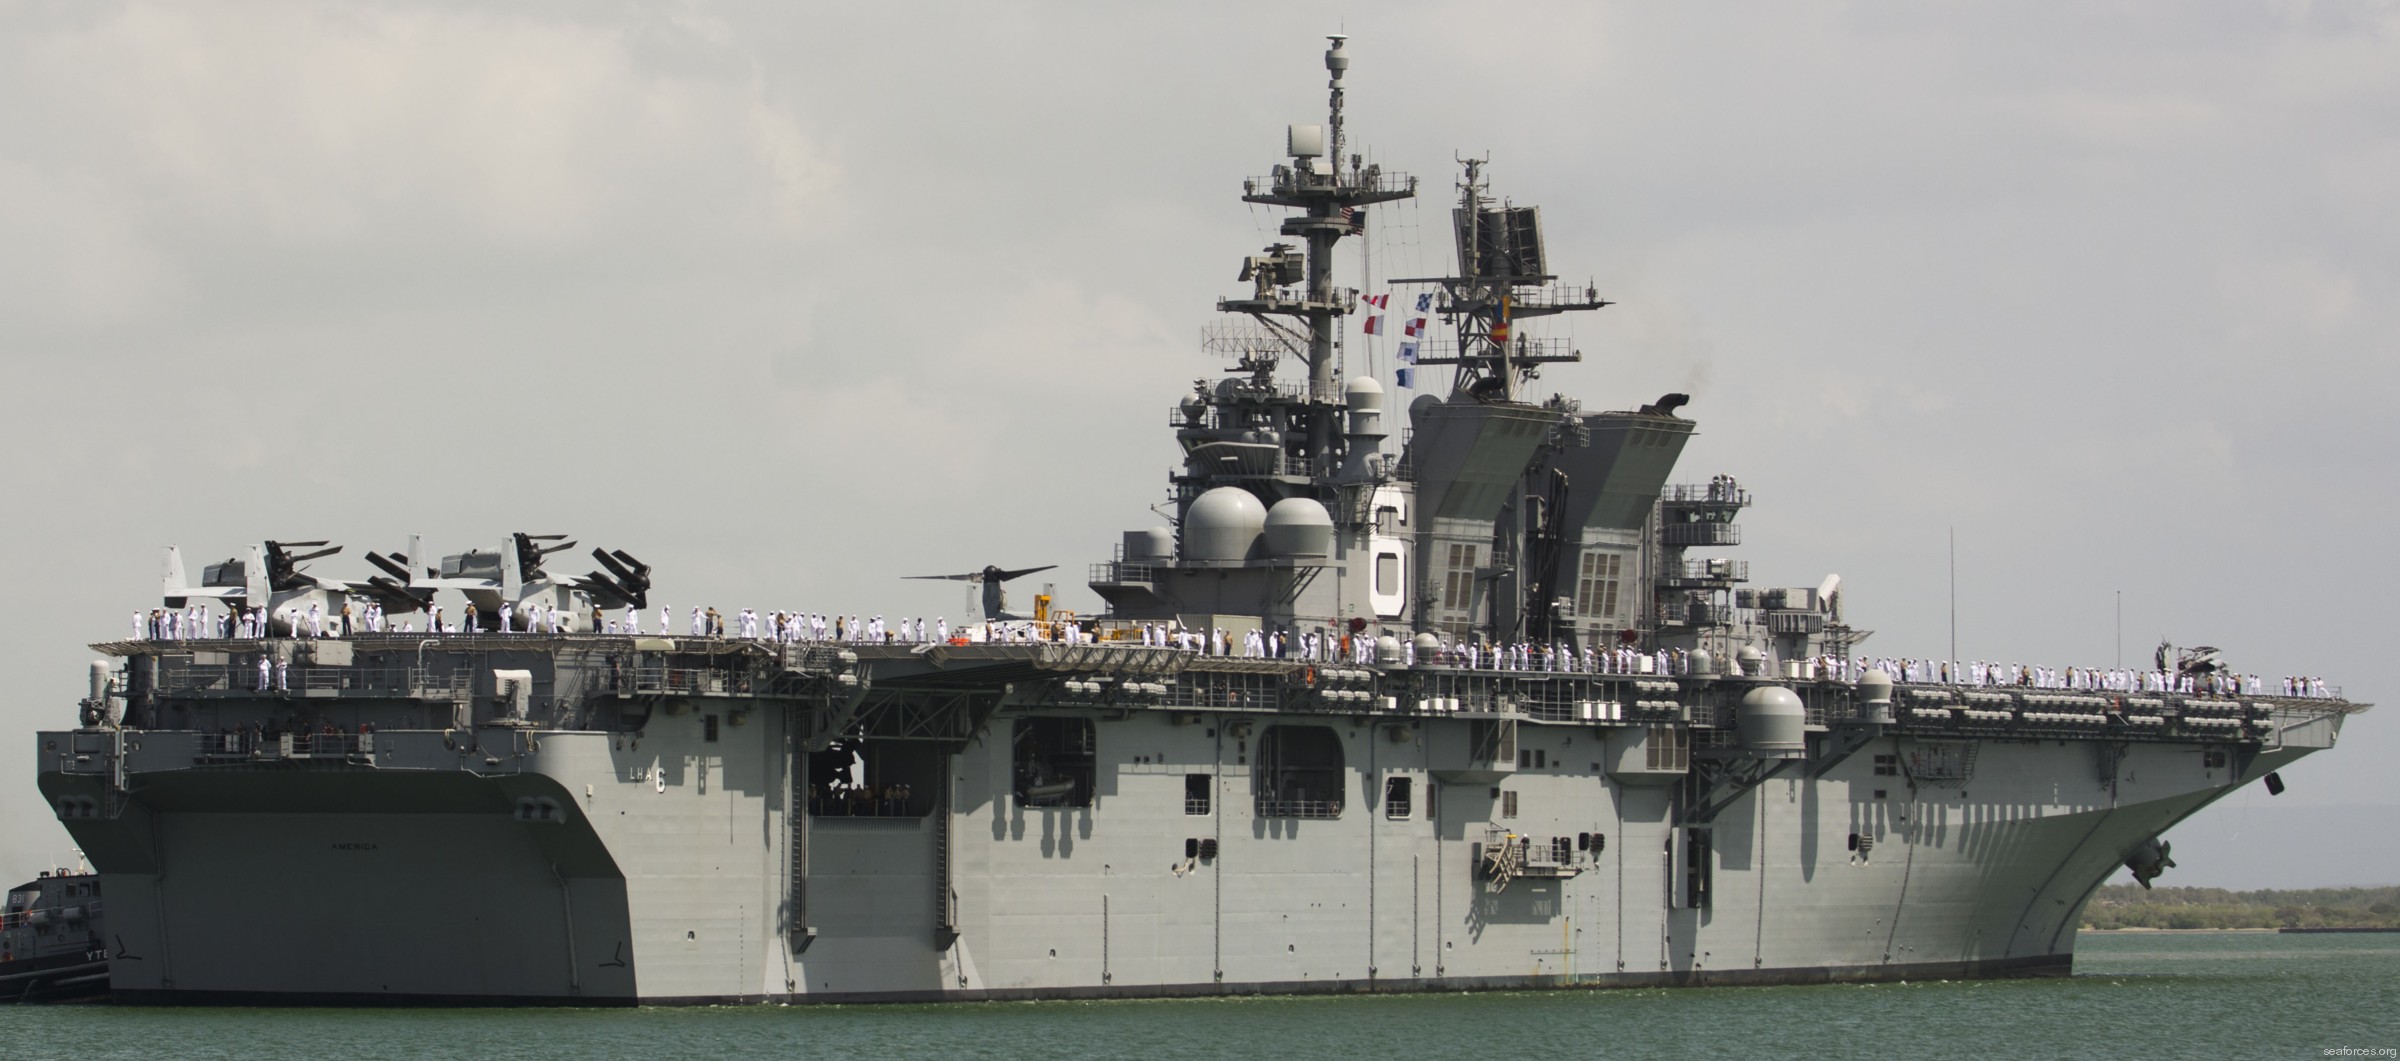 lha-6 uss america amphibious assault ship us navy 82 guantanamo bay cuba